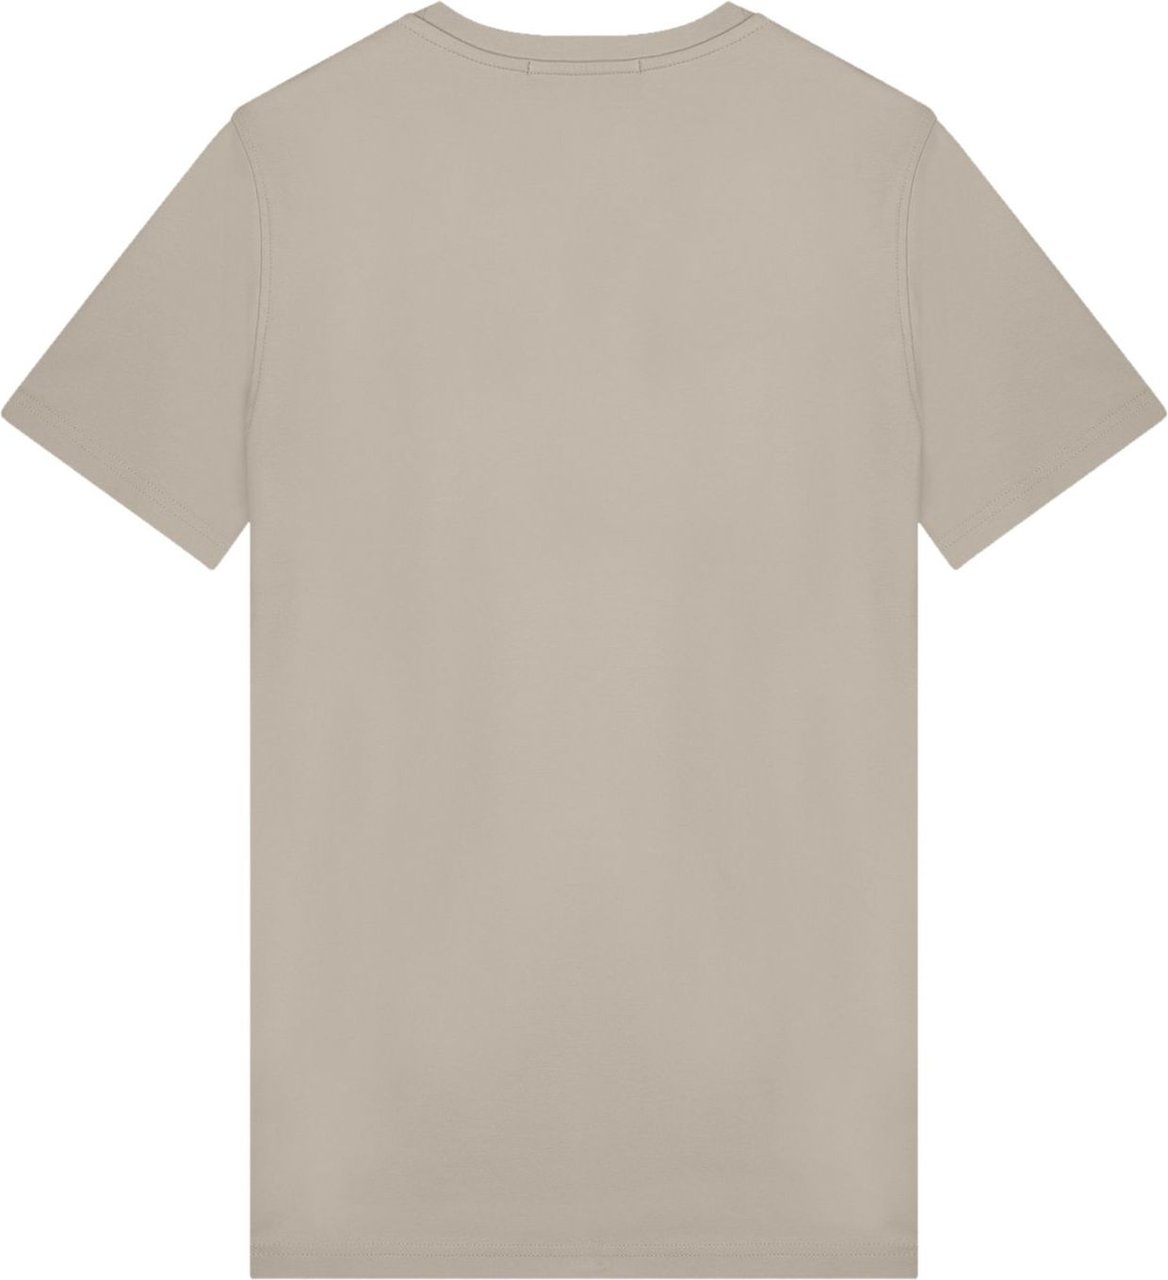 Malelions Duo Essentials T-Shirt - Grey/Orang Beige